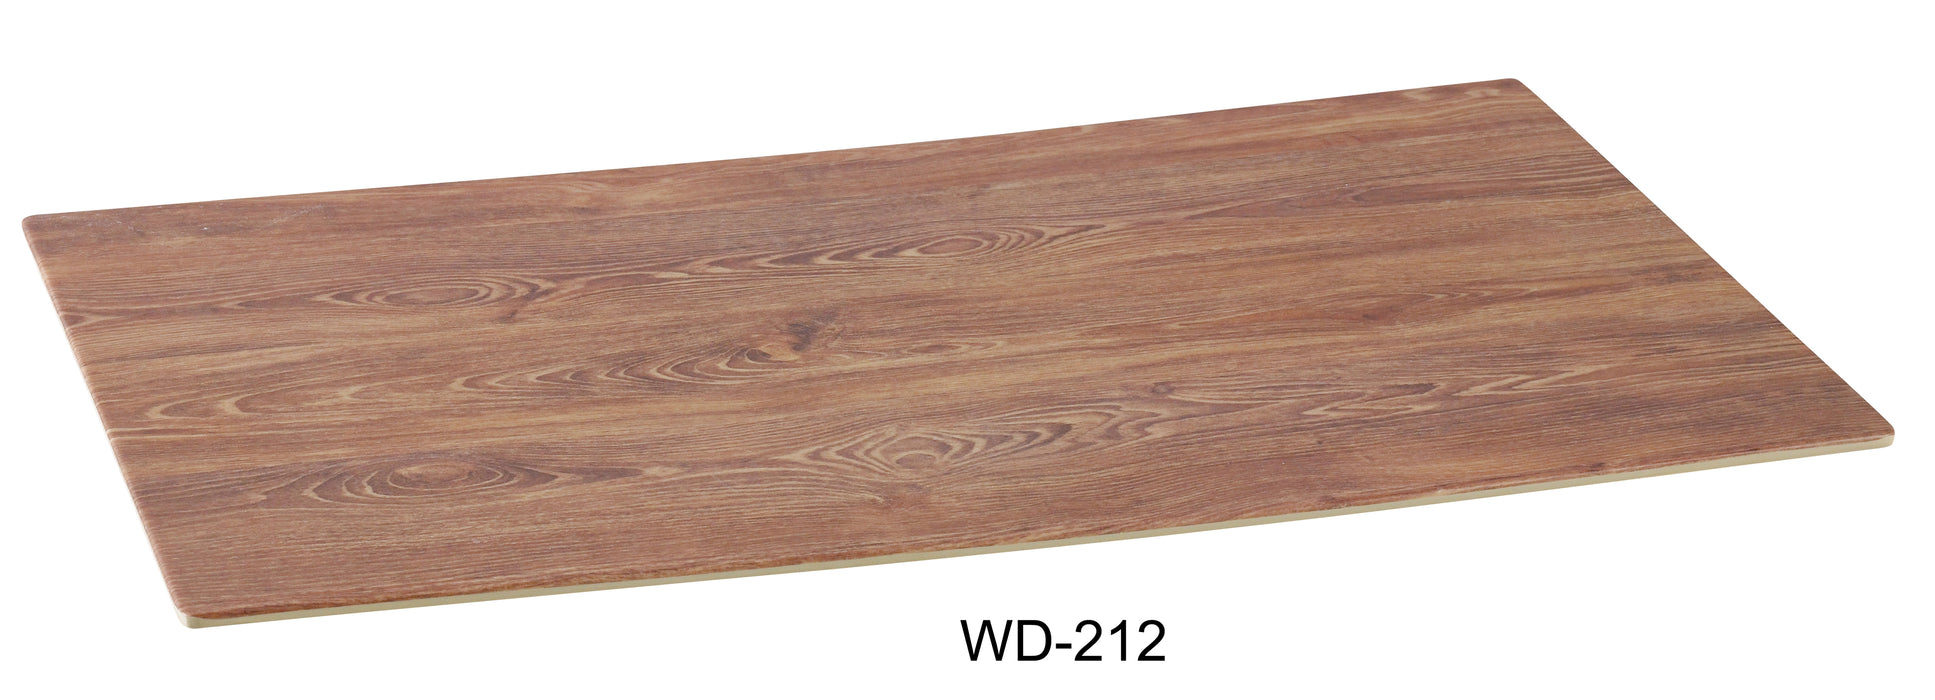 Yanco WD-212 Rectangular Wooden Tray, Melamine, Pack of 24 (2 Dz)